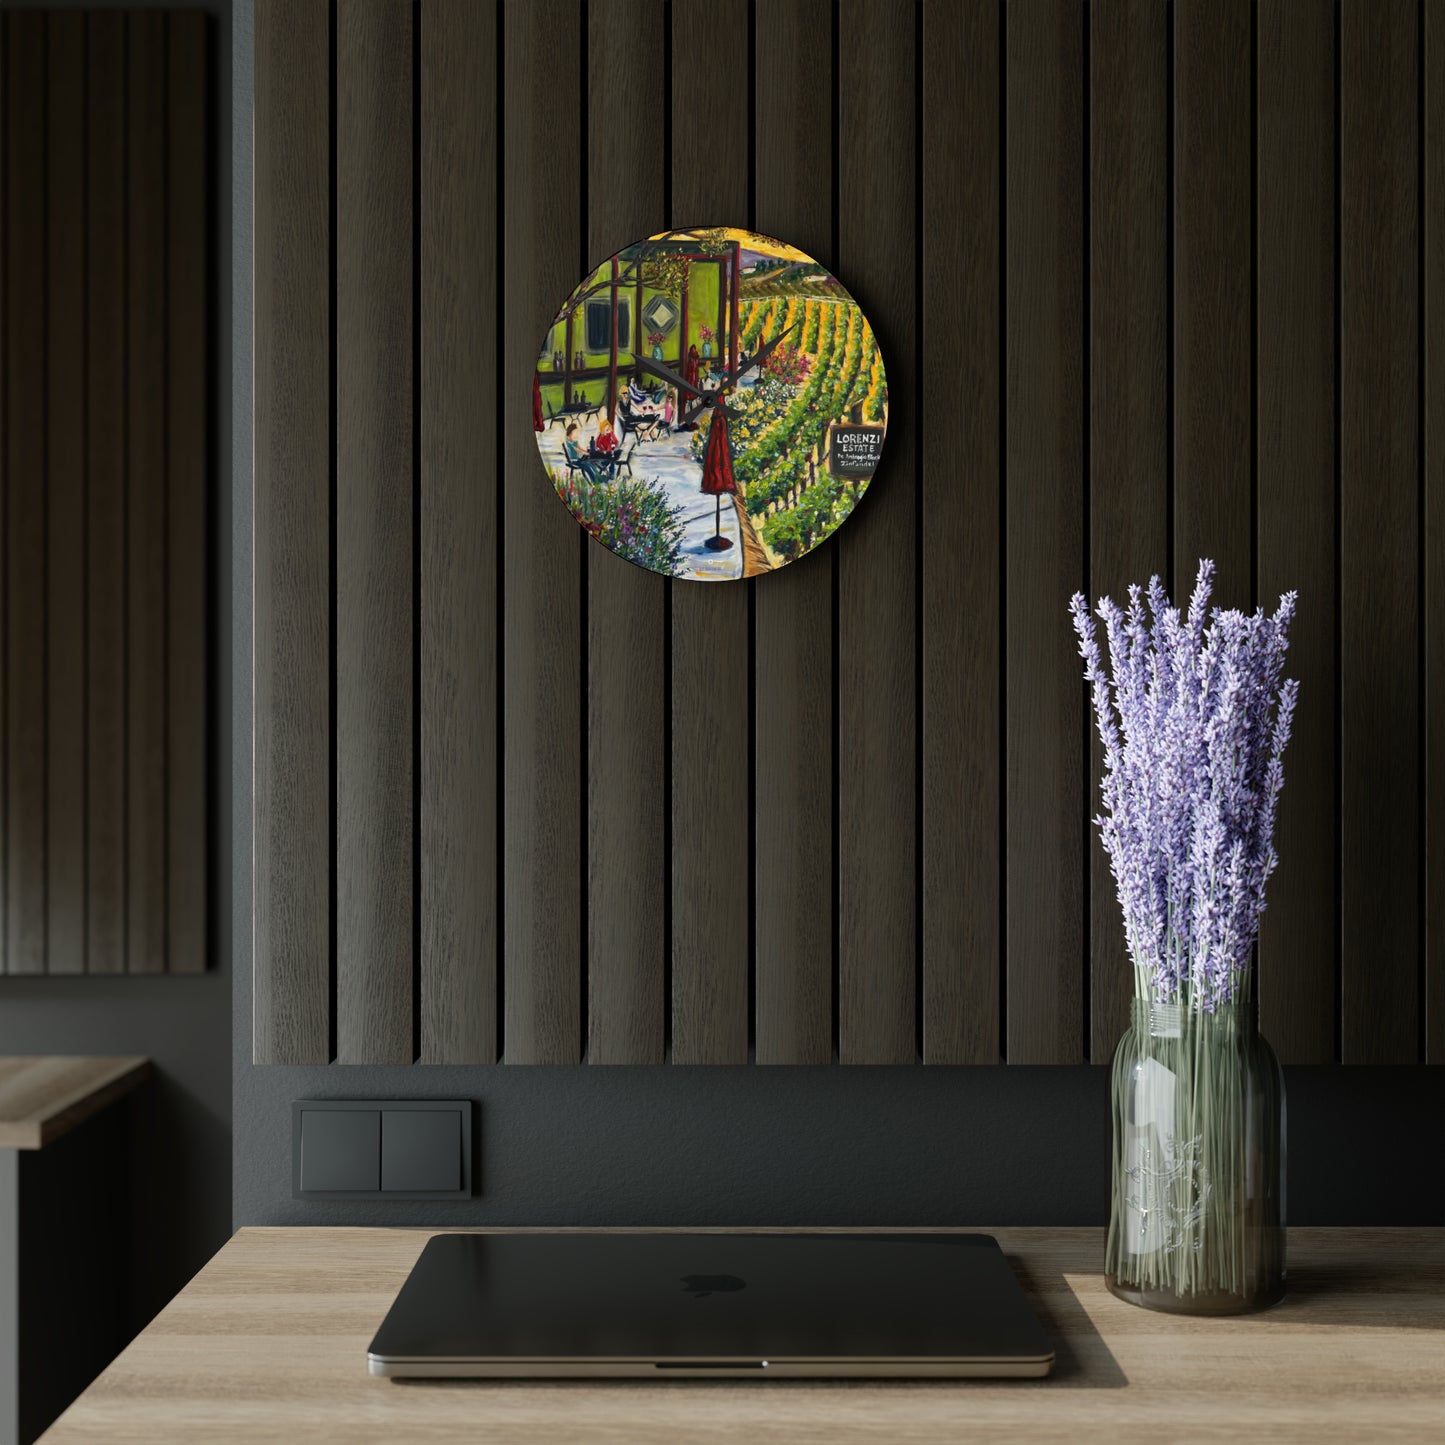 Lorenzi Estate Terrace Acrylic Wall Clock